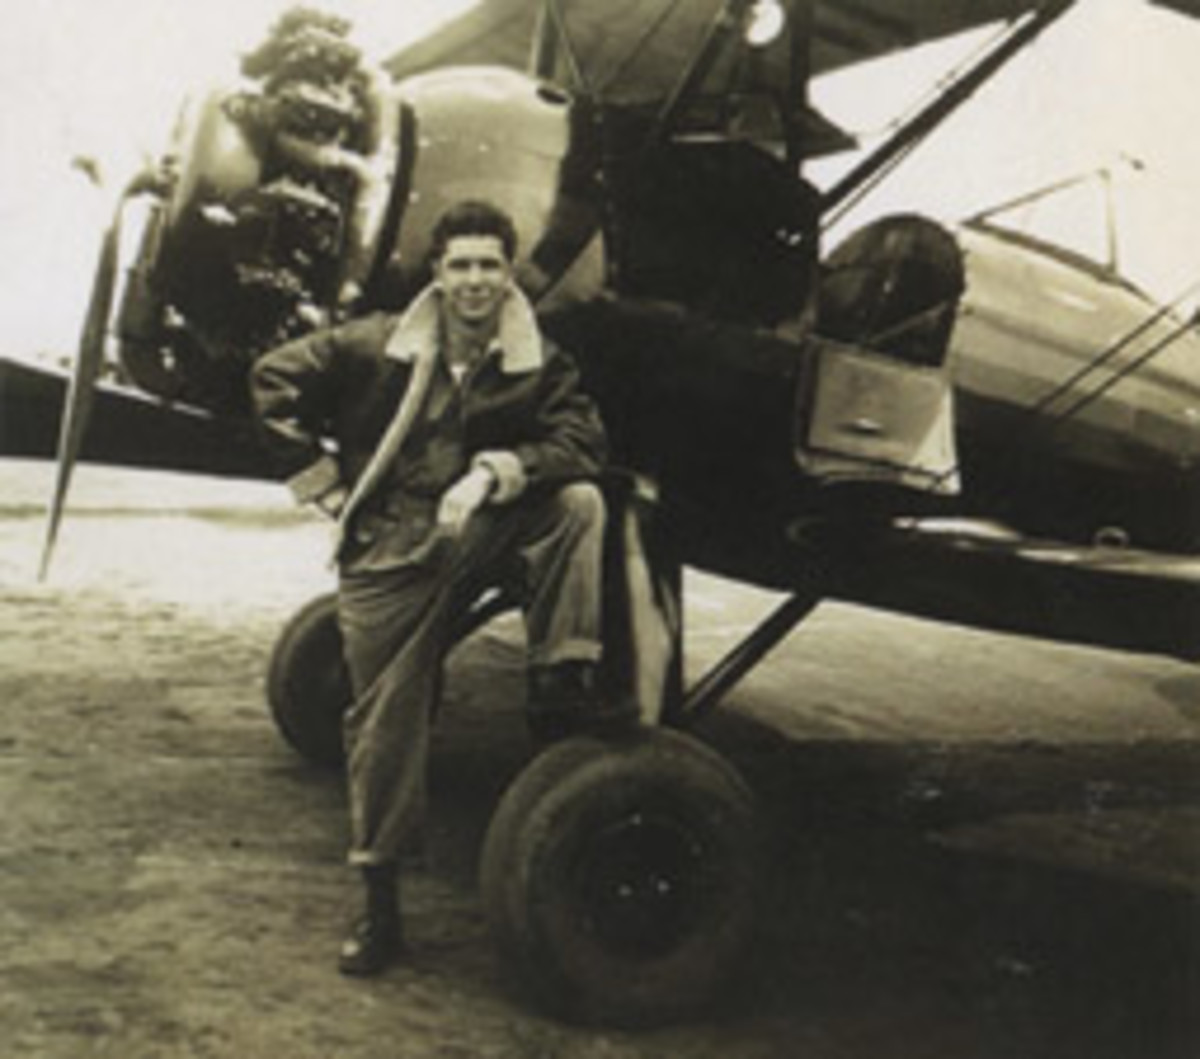 Garau trained to be a navigator on B-24 bombers.